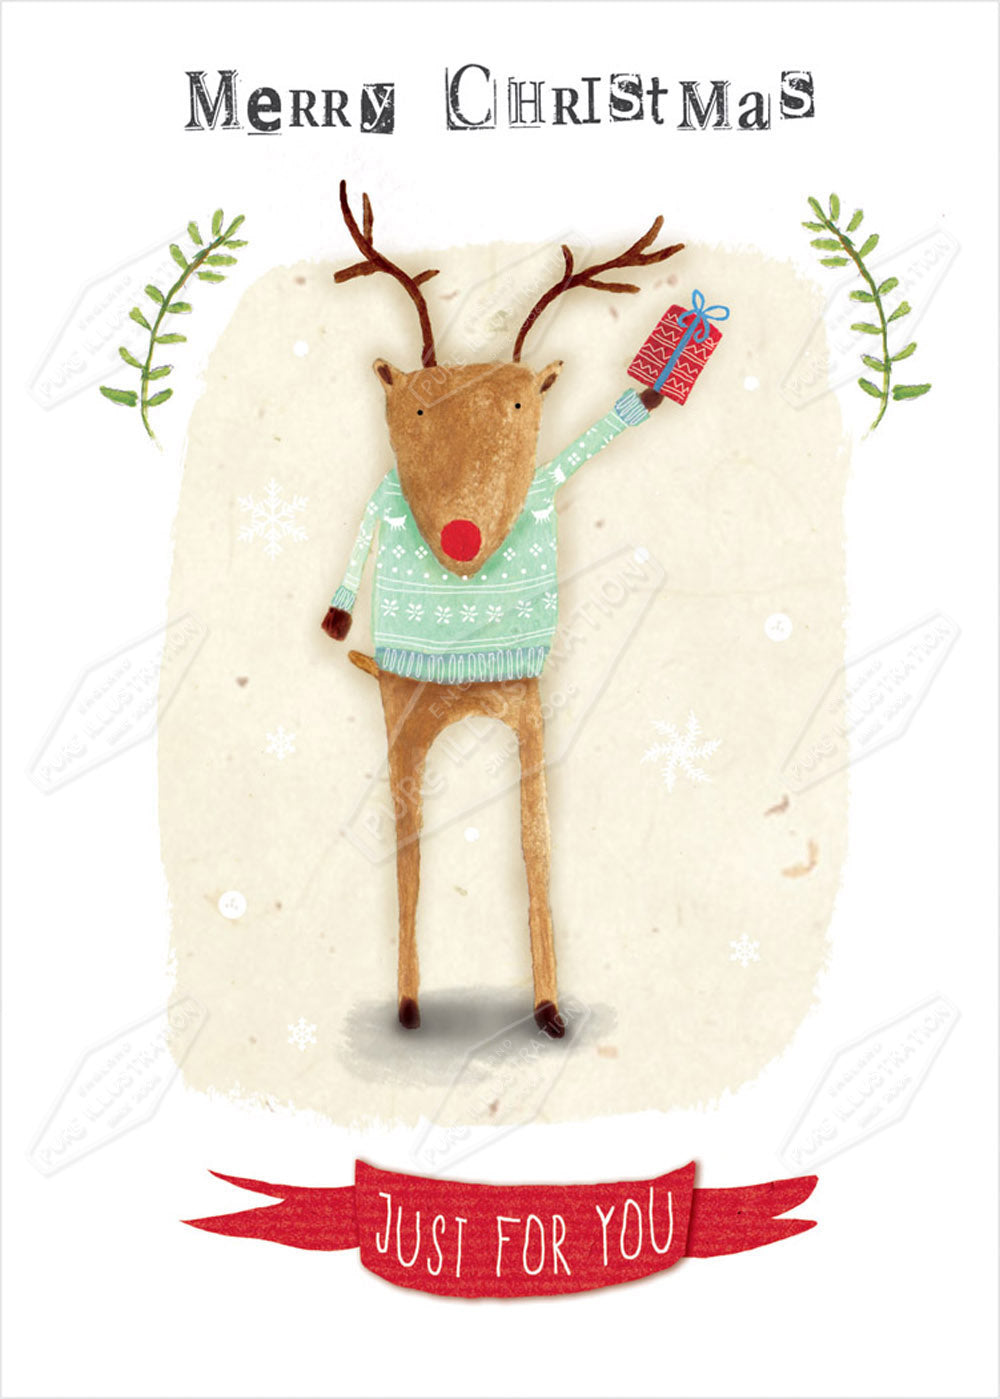 00029577CRE - Reindeer Christmas Card Design by Cory Reid - Pure Art Licensing Agency